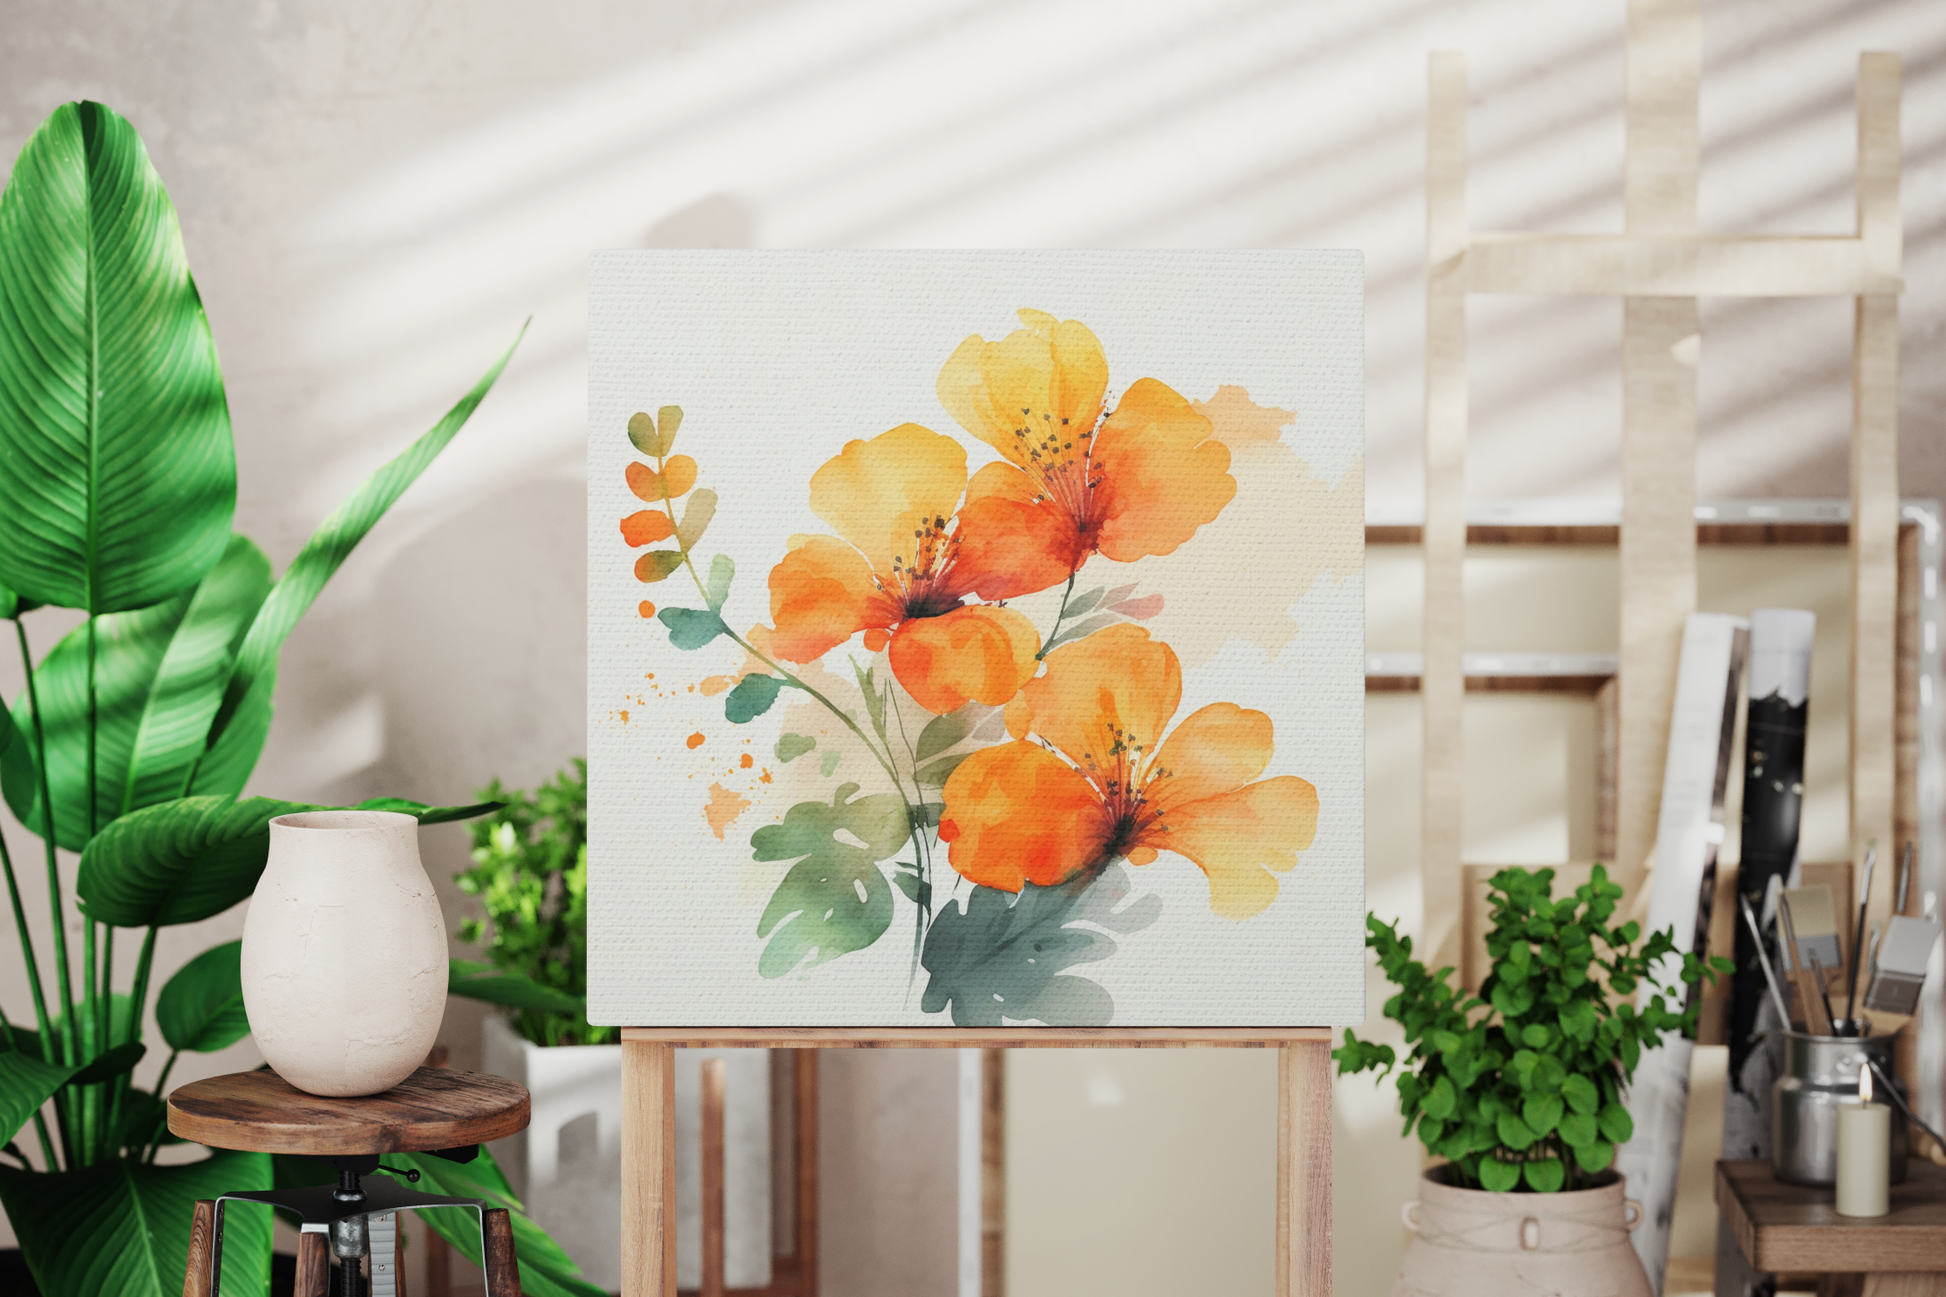 abstract orange floral design on canvas, orange floral canvas for spring decor, orange floral art print on canvas 